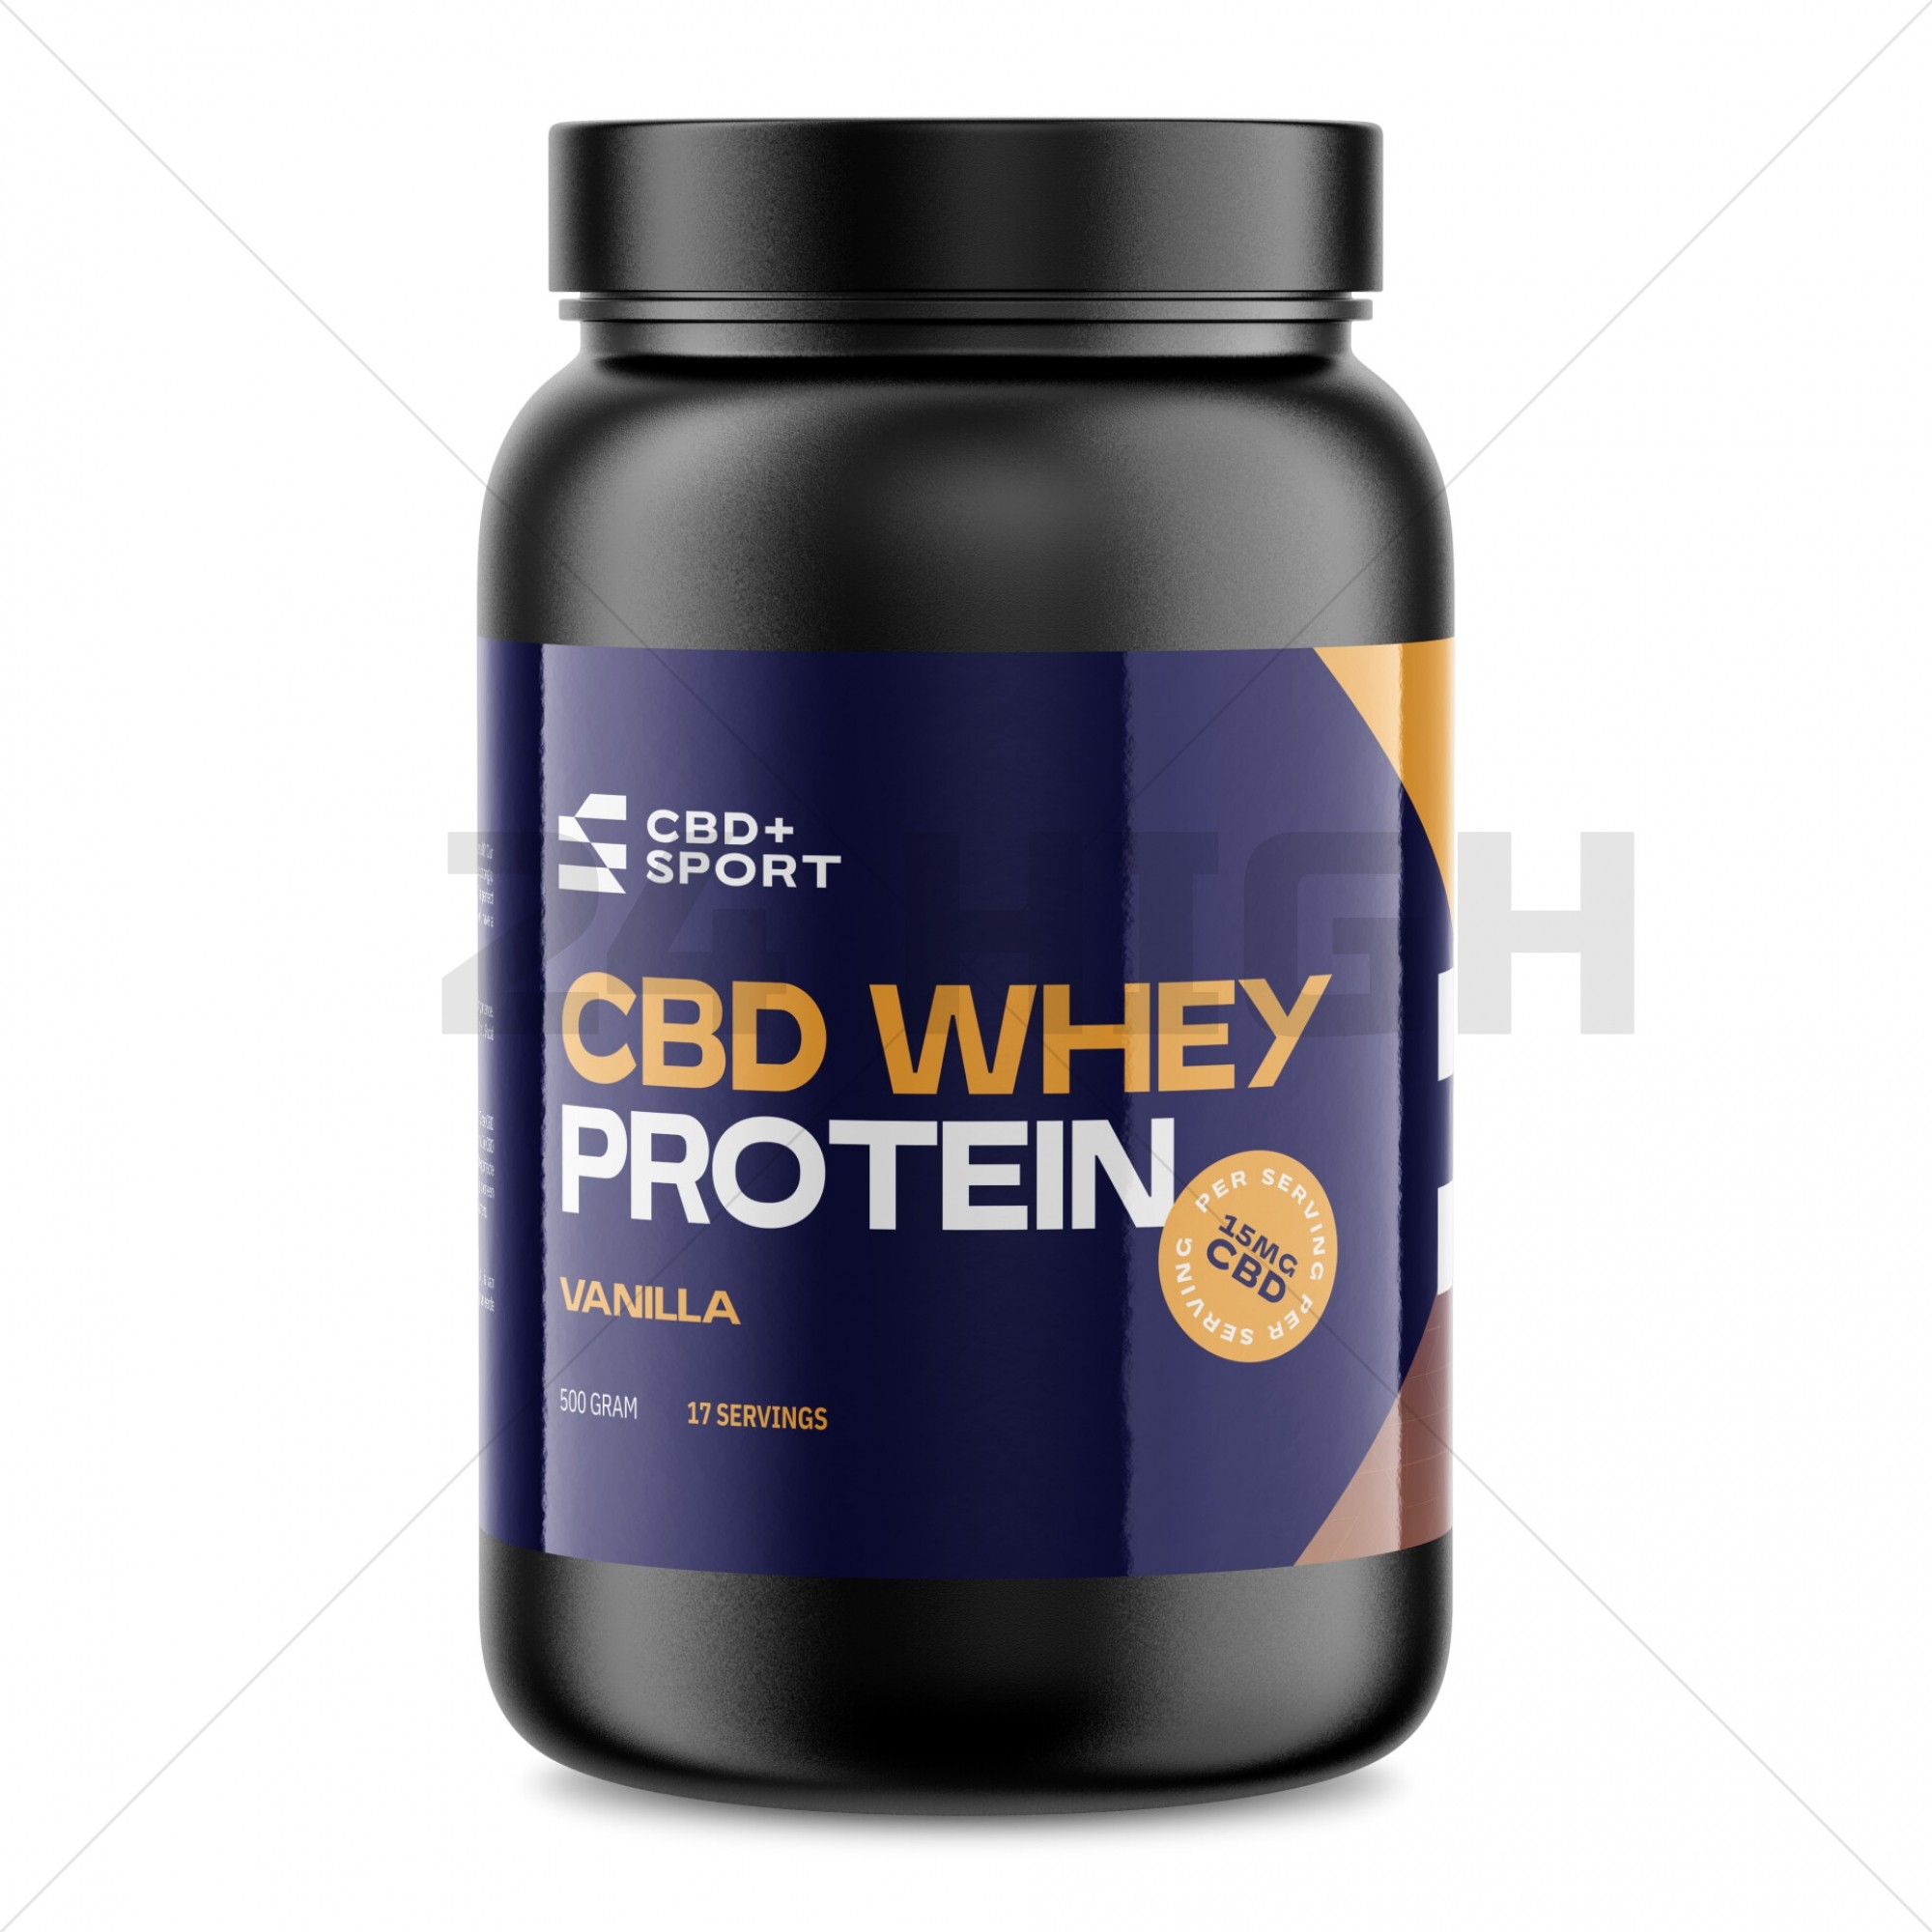 CBD + SPORT Whey Protein - 500 Gram